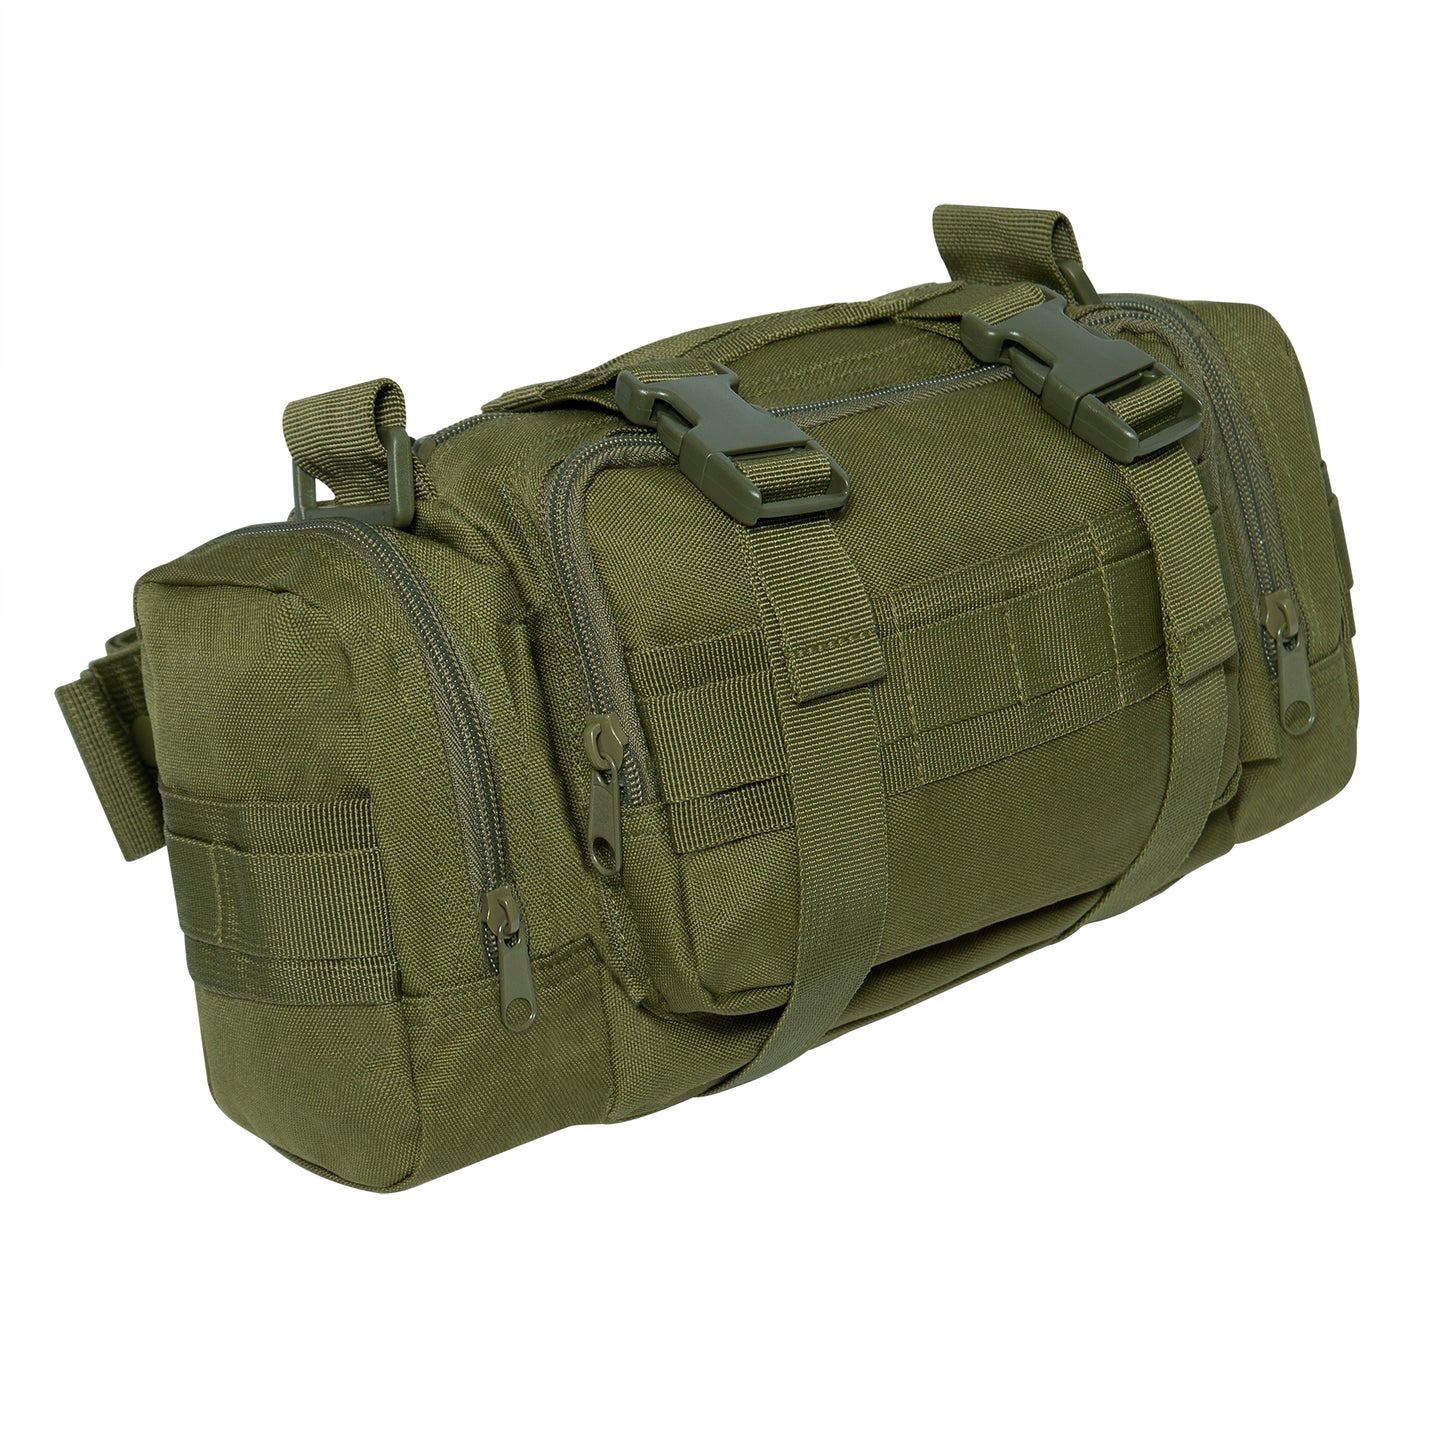 Milspec Tactical Convertipack Tactical Packs MilTac Tactical Military Outdoor Gear Australia